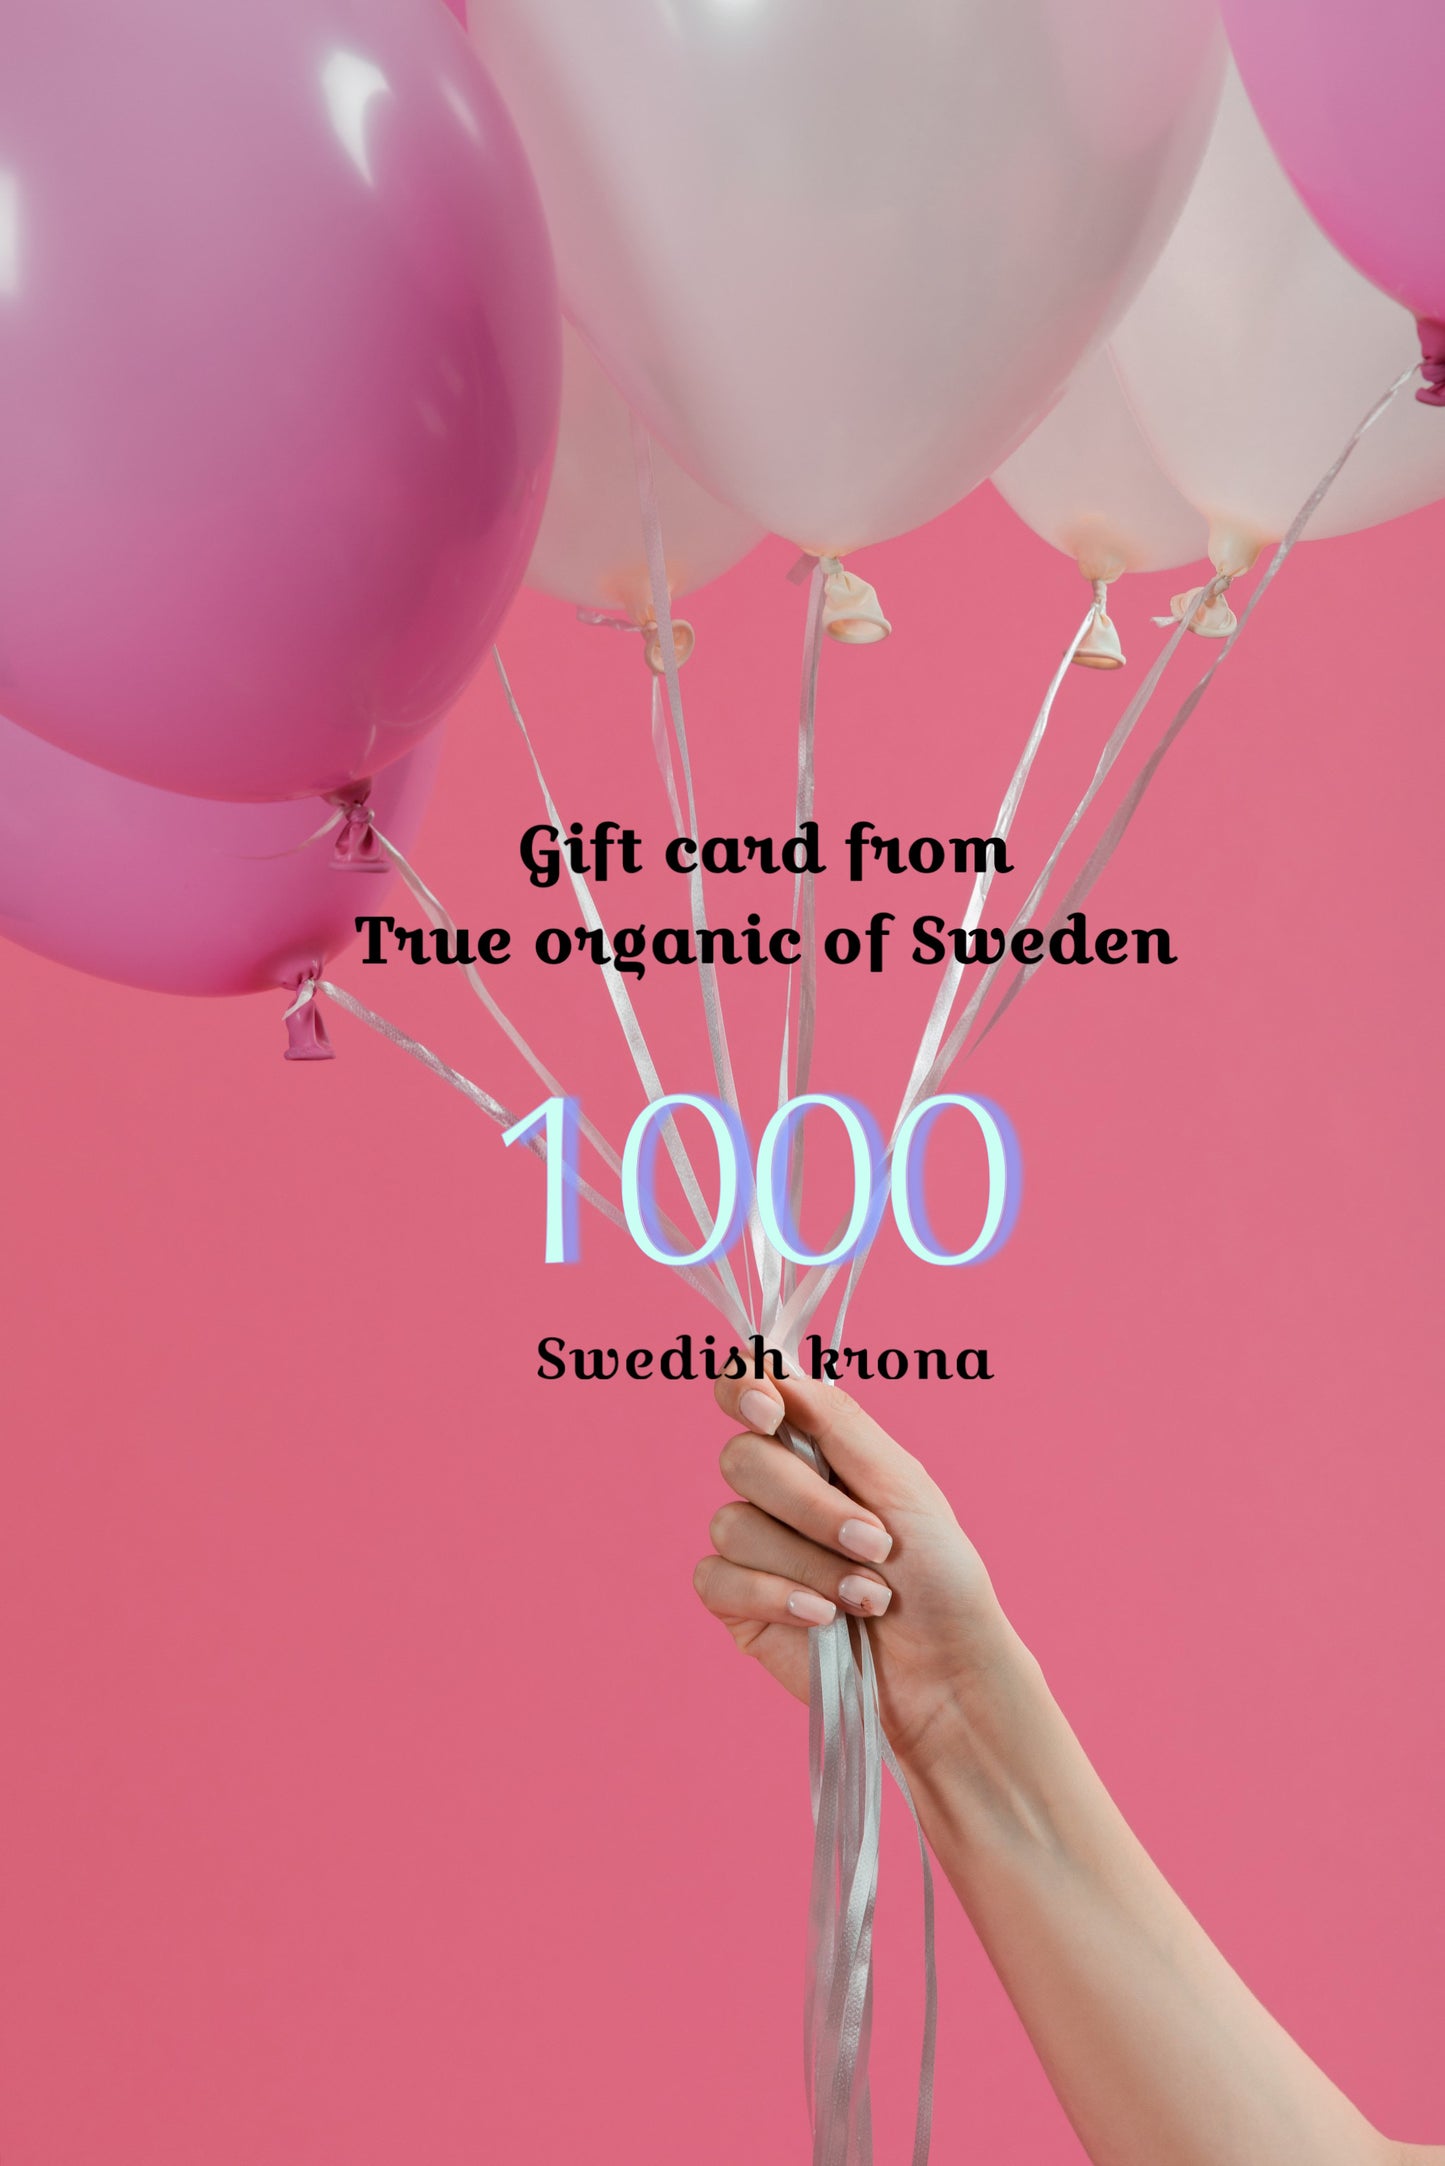 Gift card from True organic of Sweden 1000 krona 